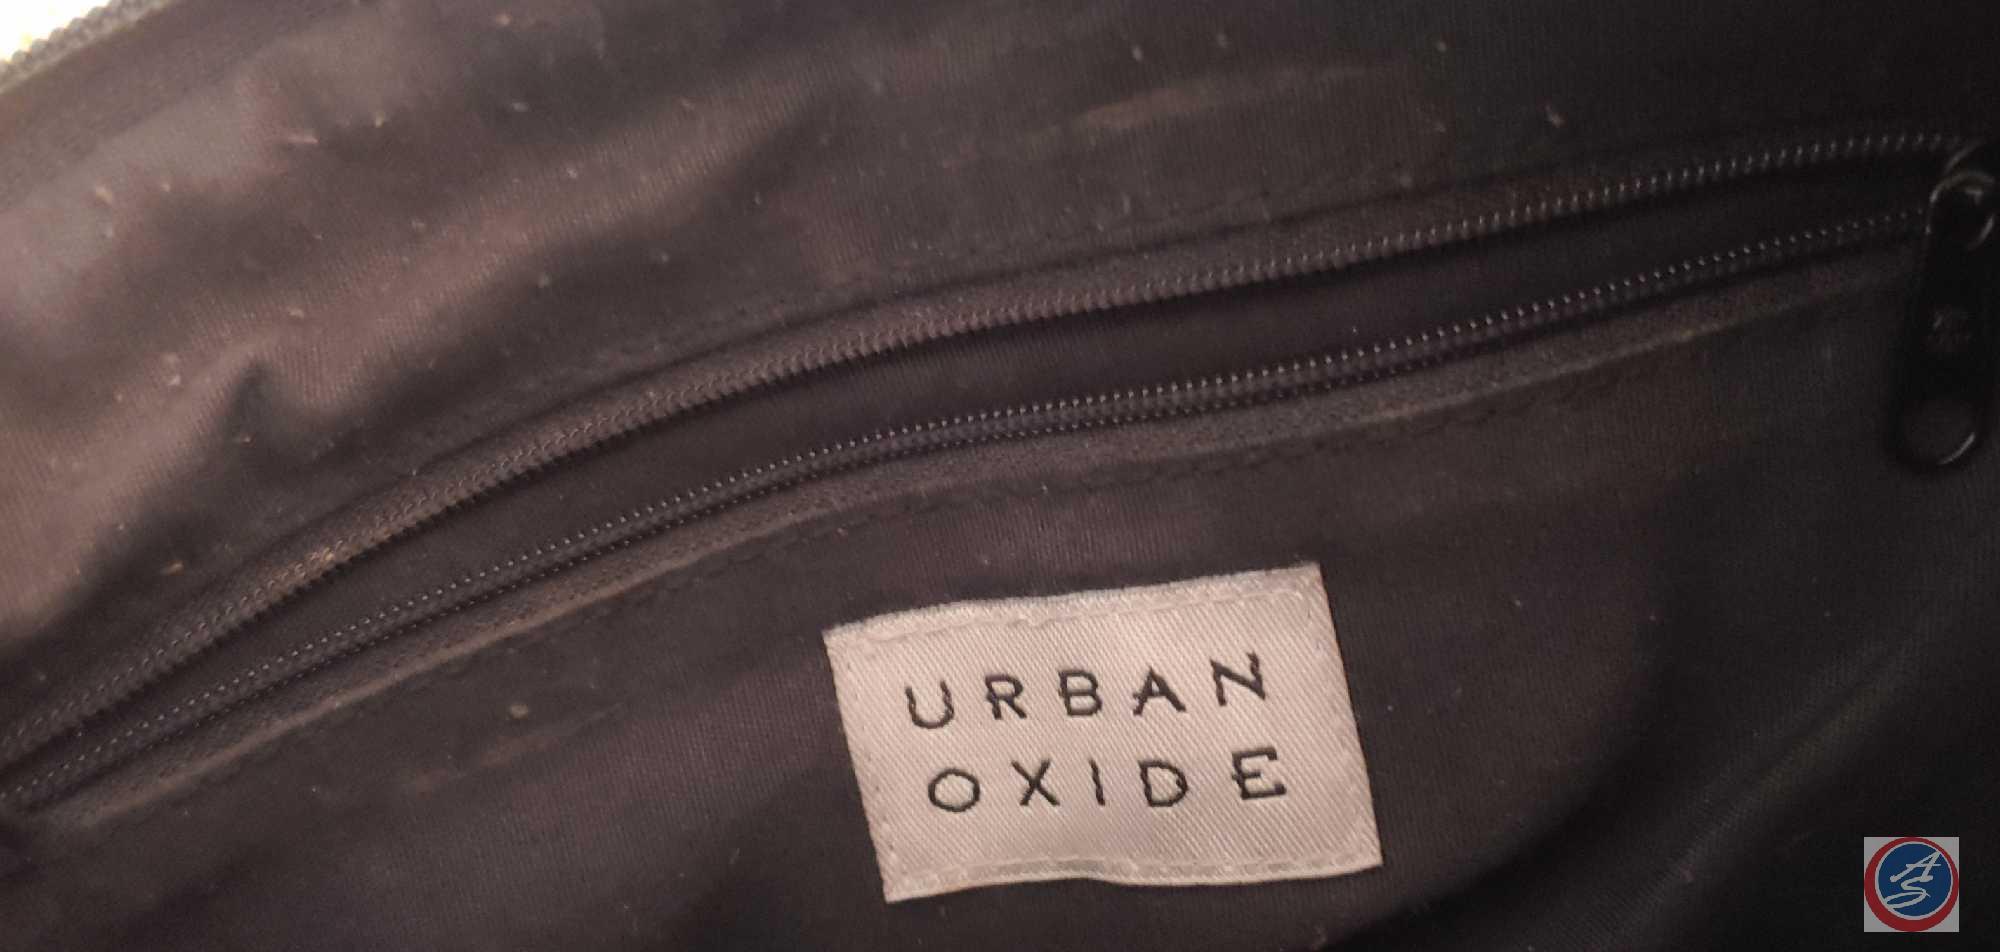 Assorted Purses and Bags, Urban Oxide, Rosetti.